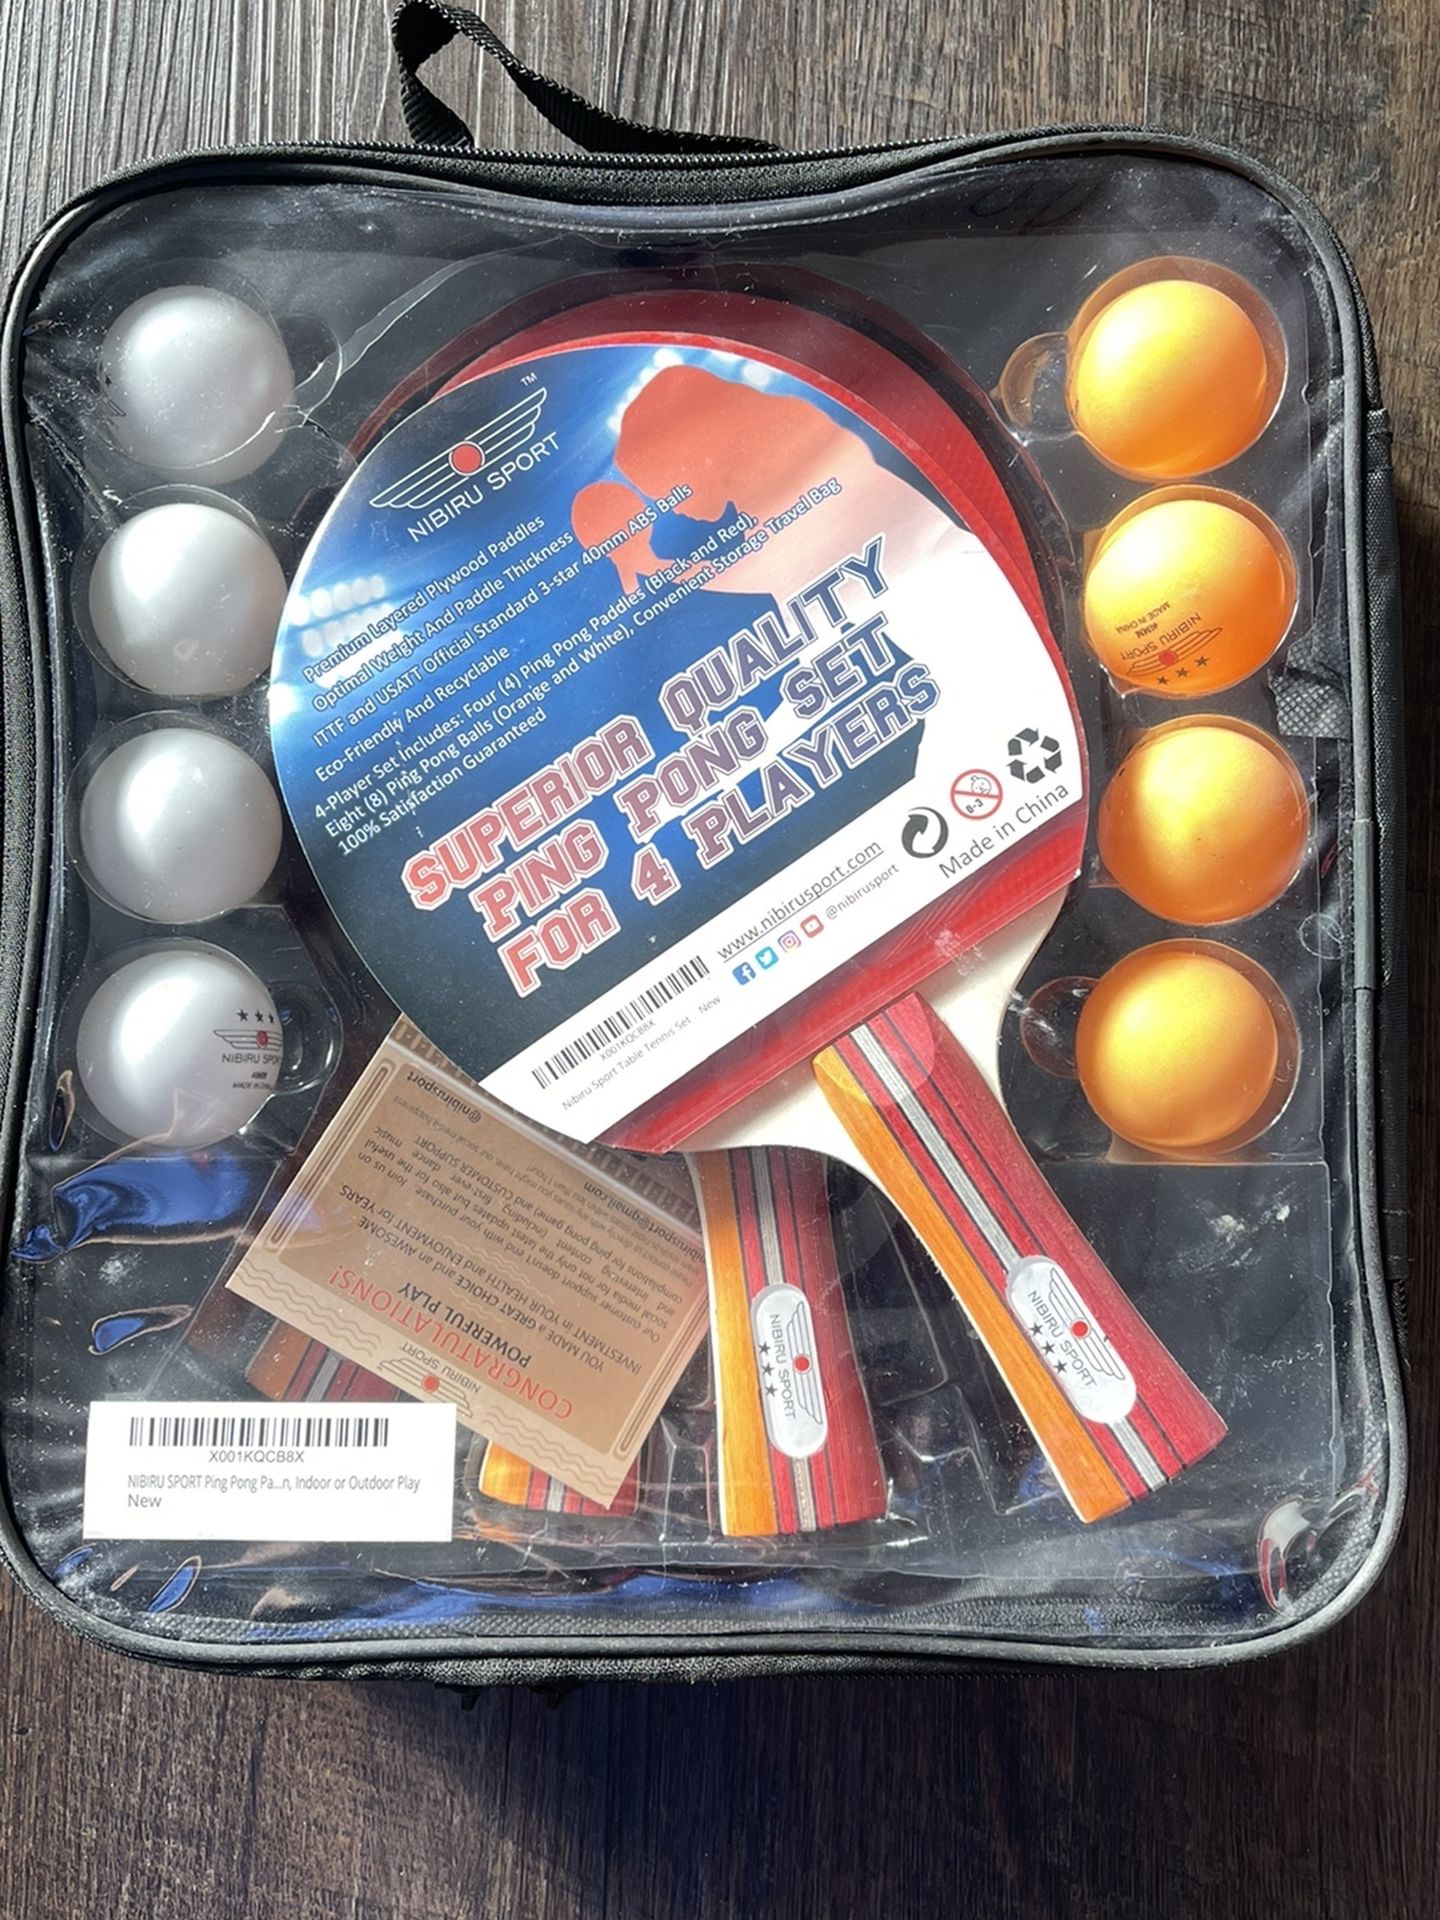 NIBIRU SPORT Ping Pong Paddle Set (4-Player Bundle), Pro Premium Rackets, 3 Star Balls, Portable Storage Case, Complete Table Tennis Set with Advanced